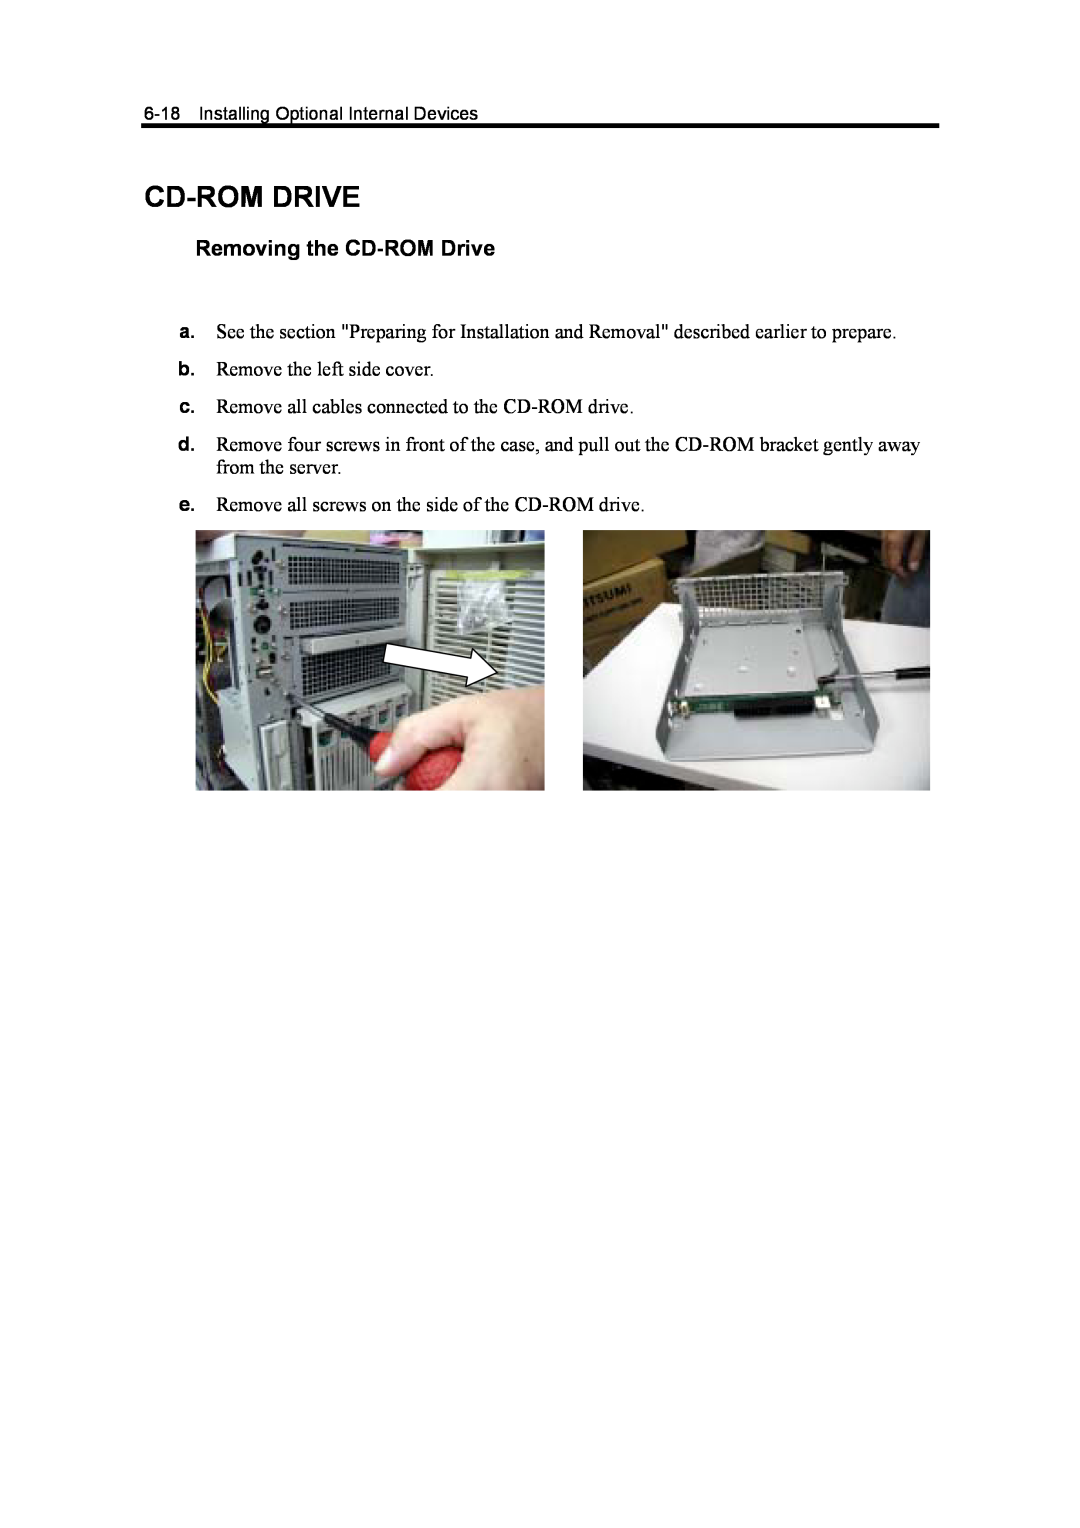 NEC 5800, 120Mf manual Cd-Rom Drive, Removing the CD-ROM Drive 